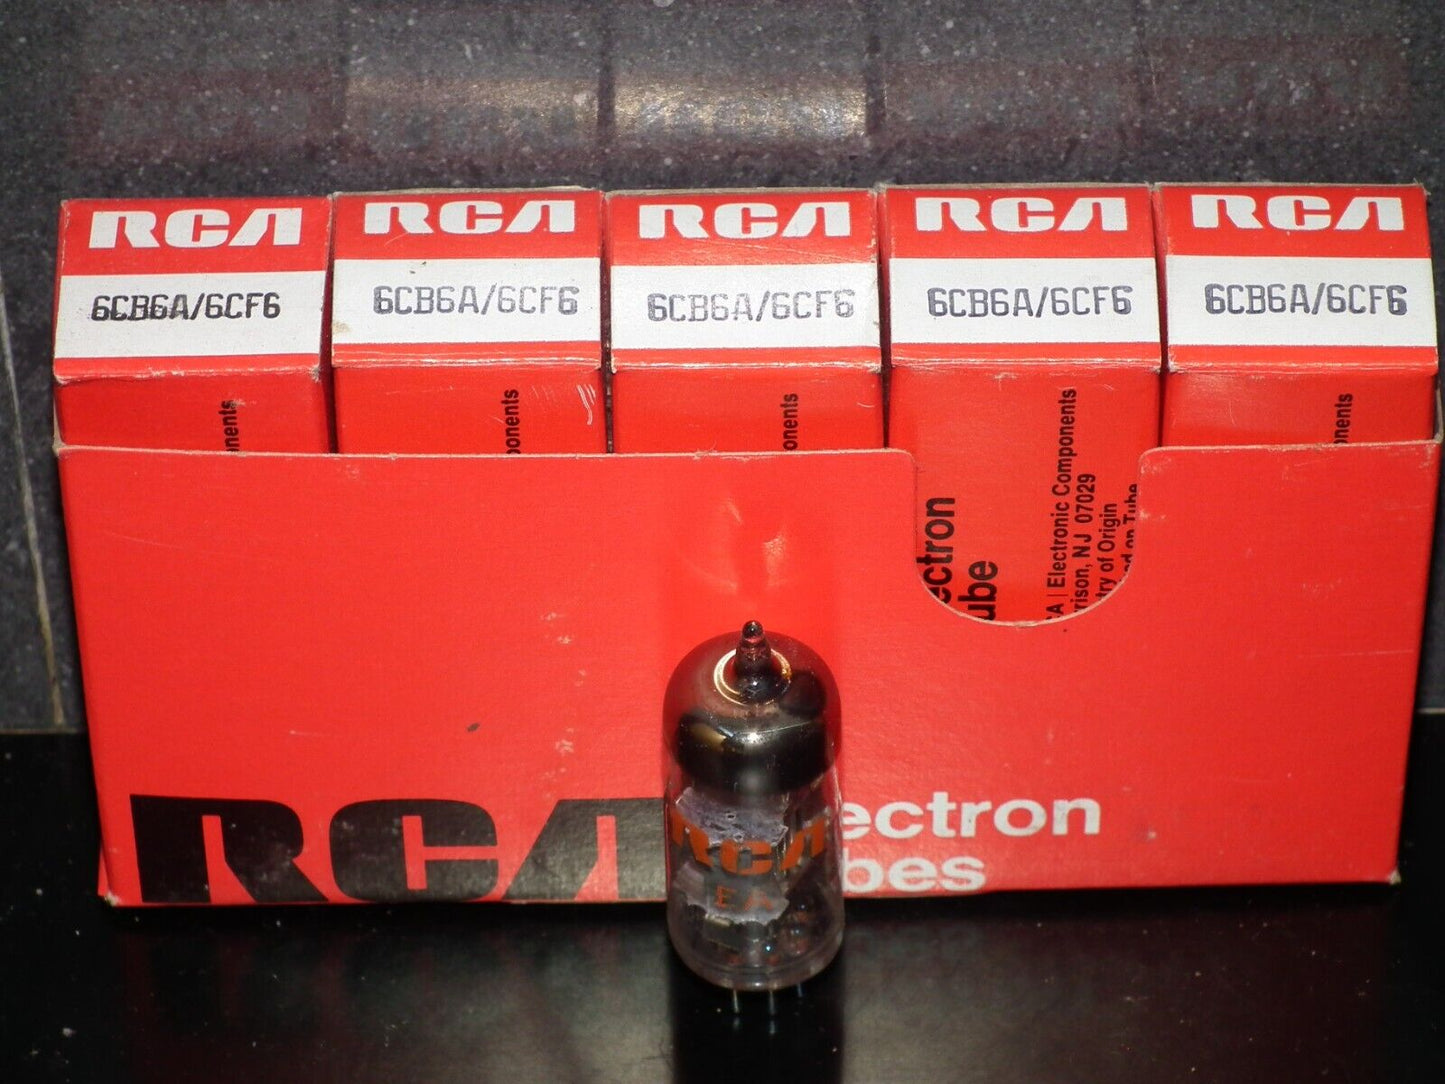 6CB6A RCA 6CF6 NOS in original box